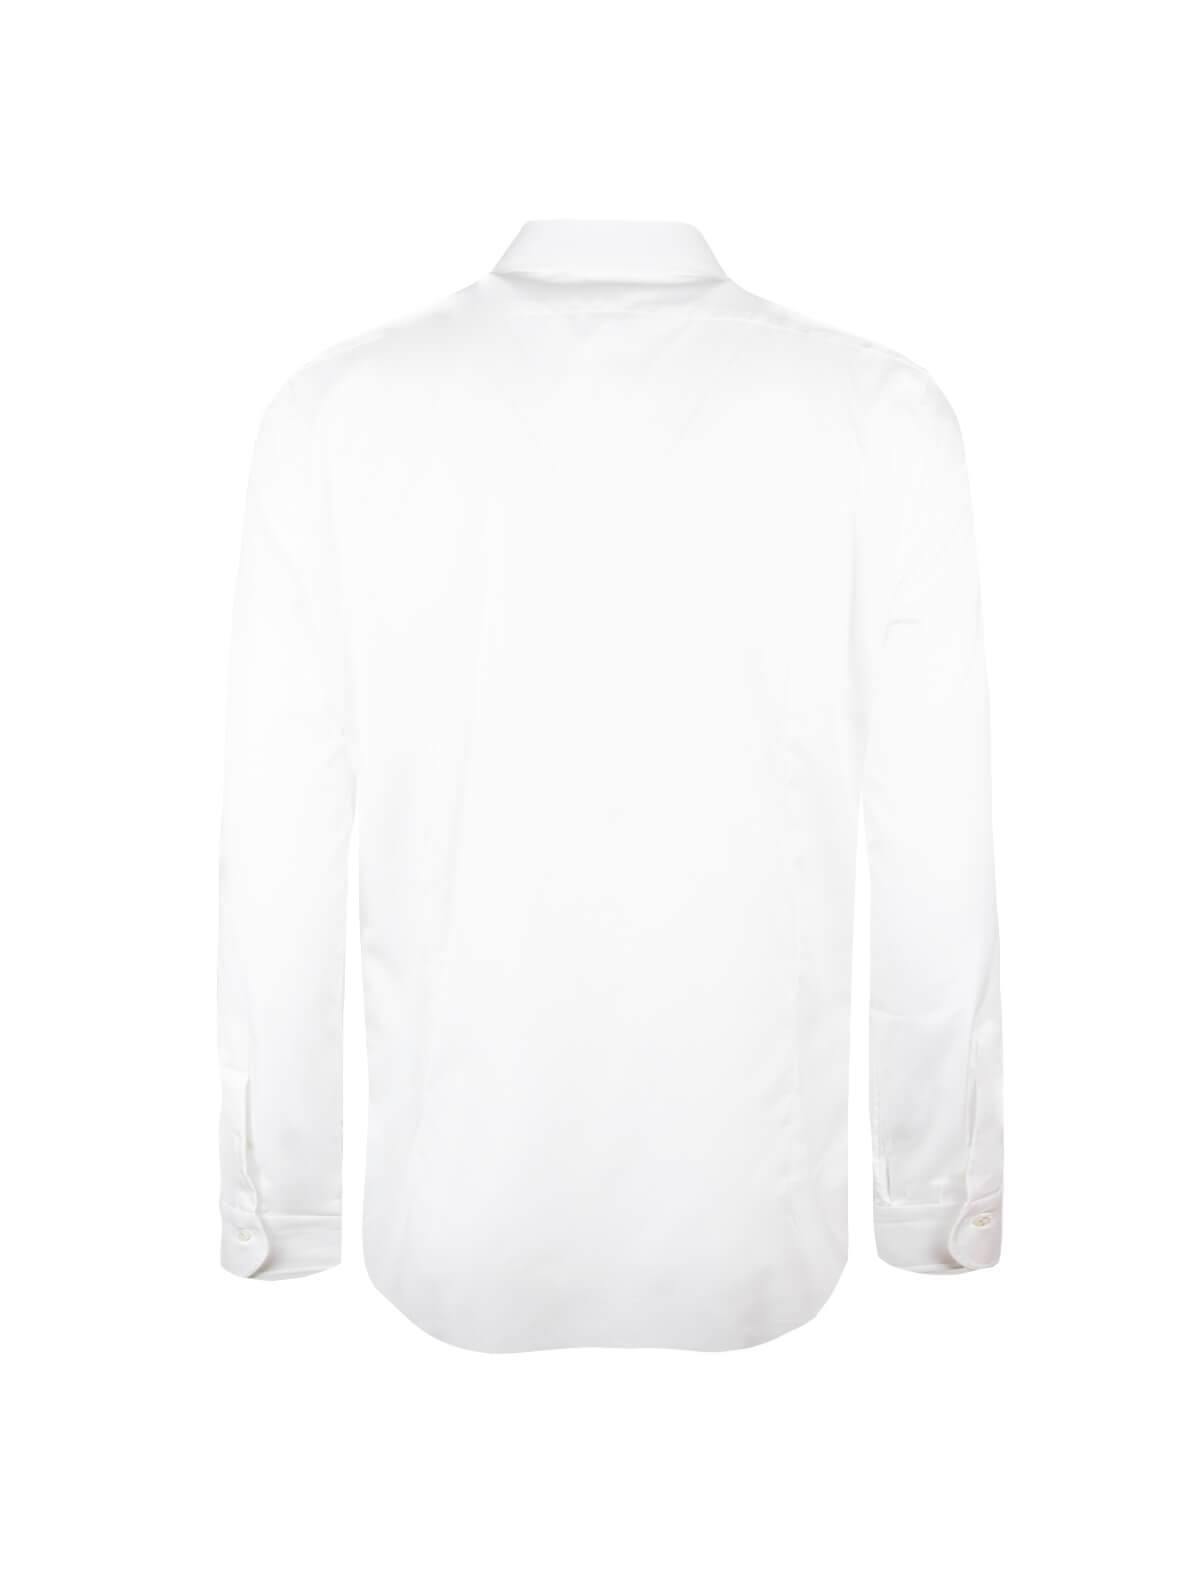 BARBA Napoli Journey Wrinkle-Resistant Shirt in White